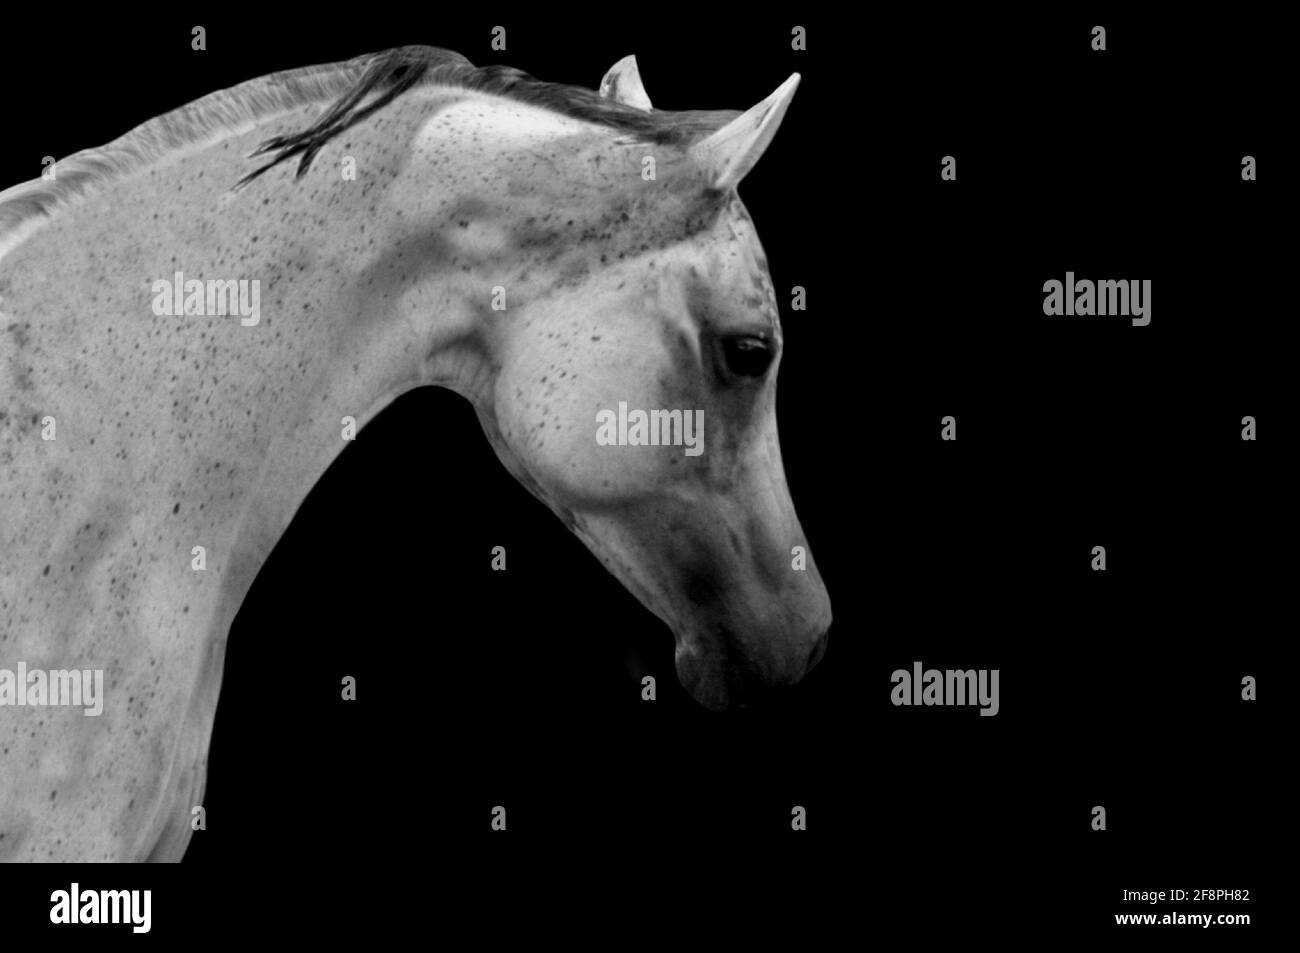 Sad White Horse Closeup Face In The Black Background Stock Photo